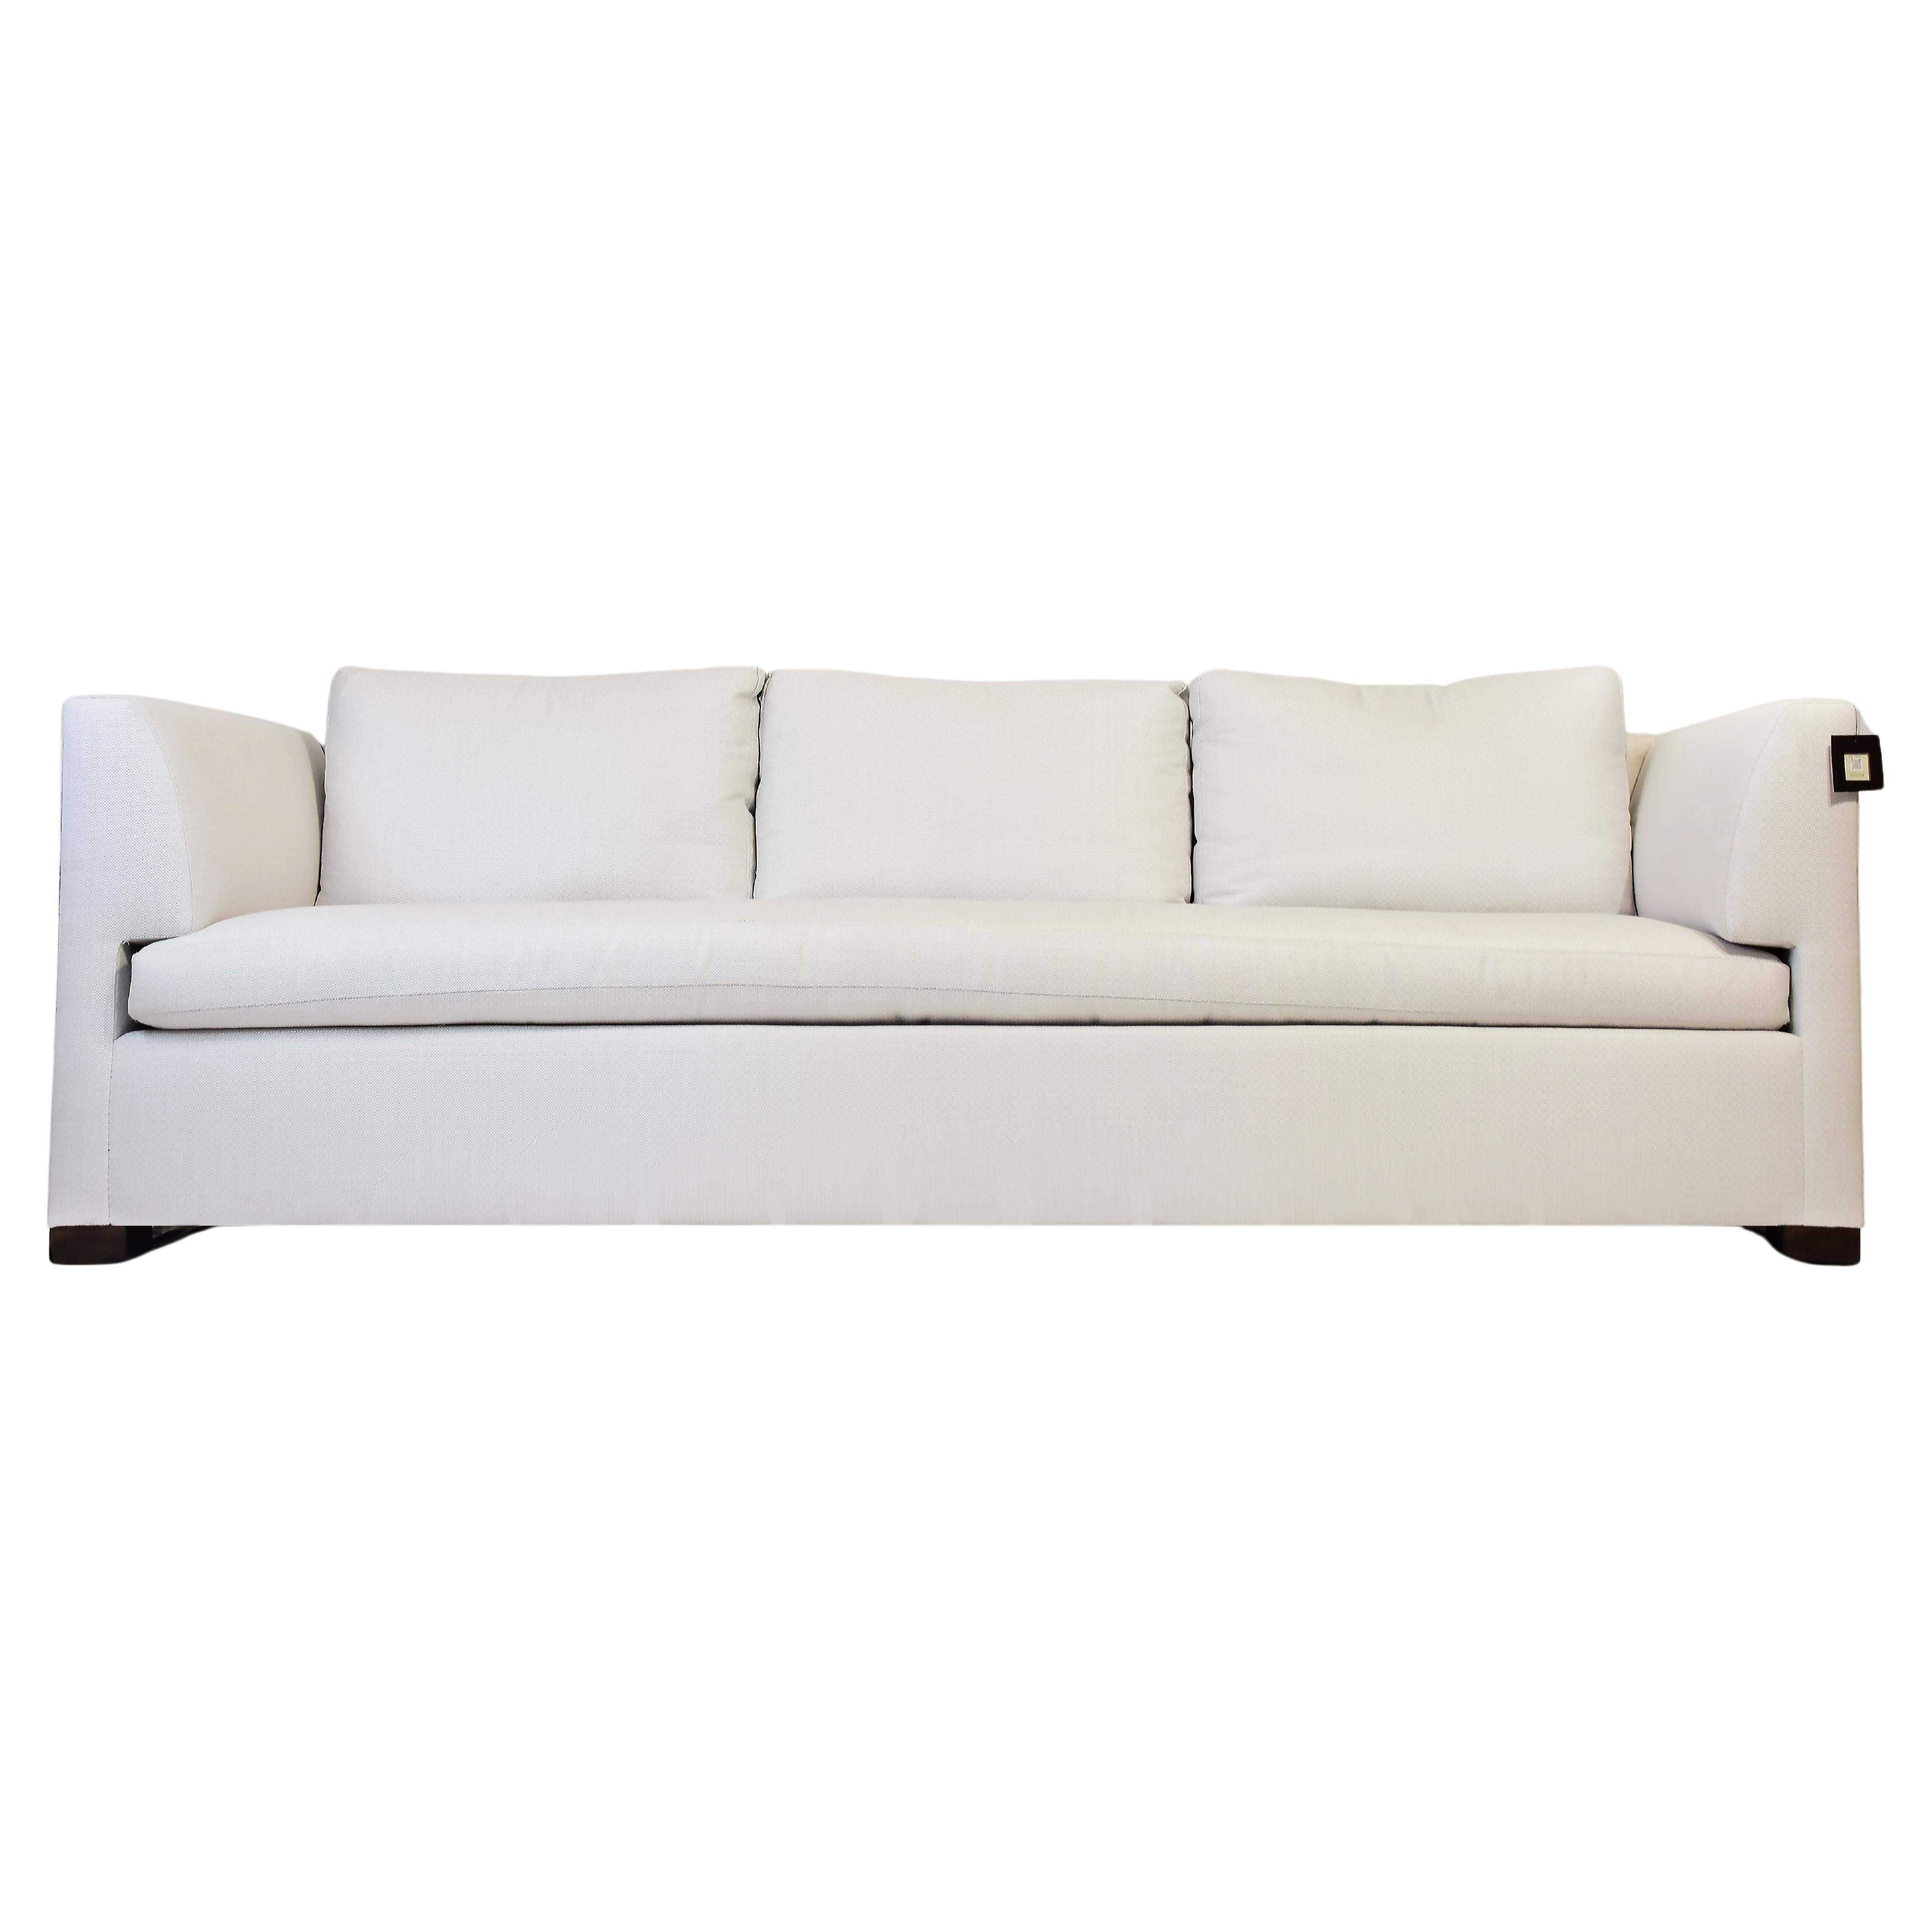 Le Jeune Upholstery Ashley 3 Seat Sofa in Light Gray Floor Model For Sale